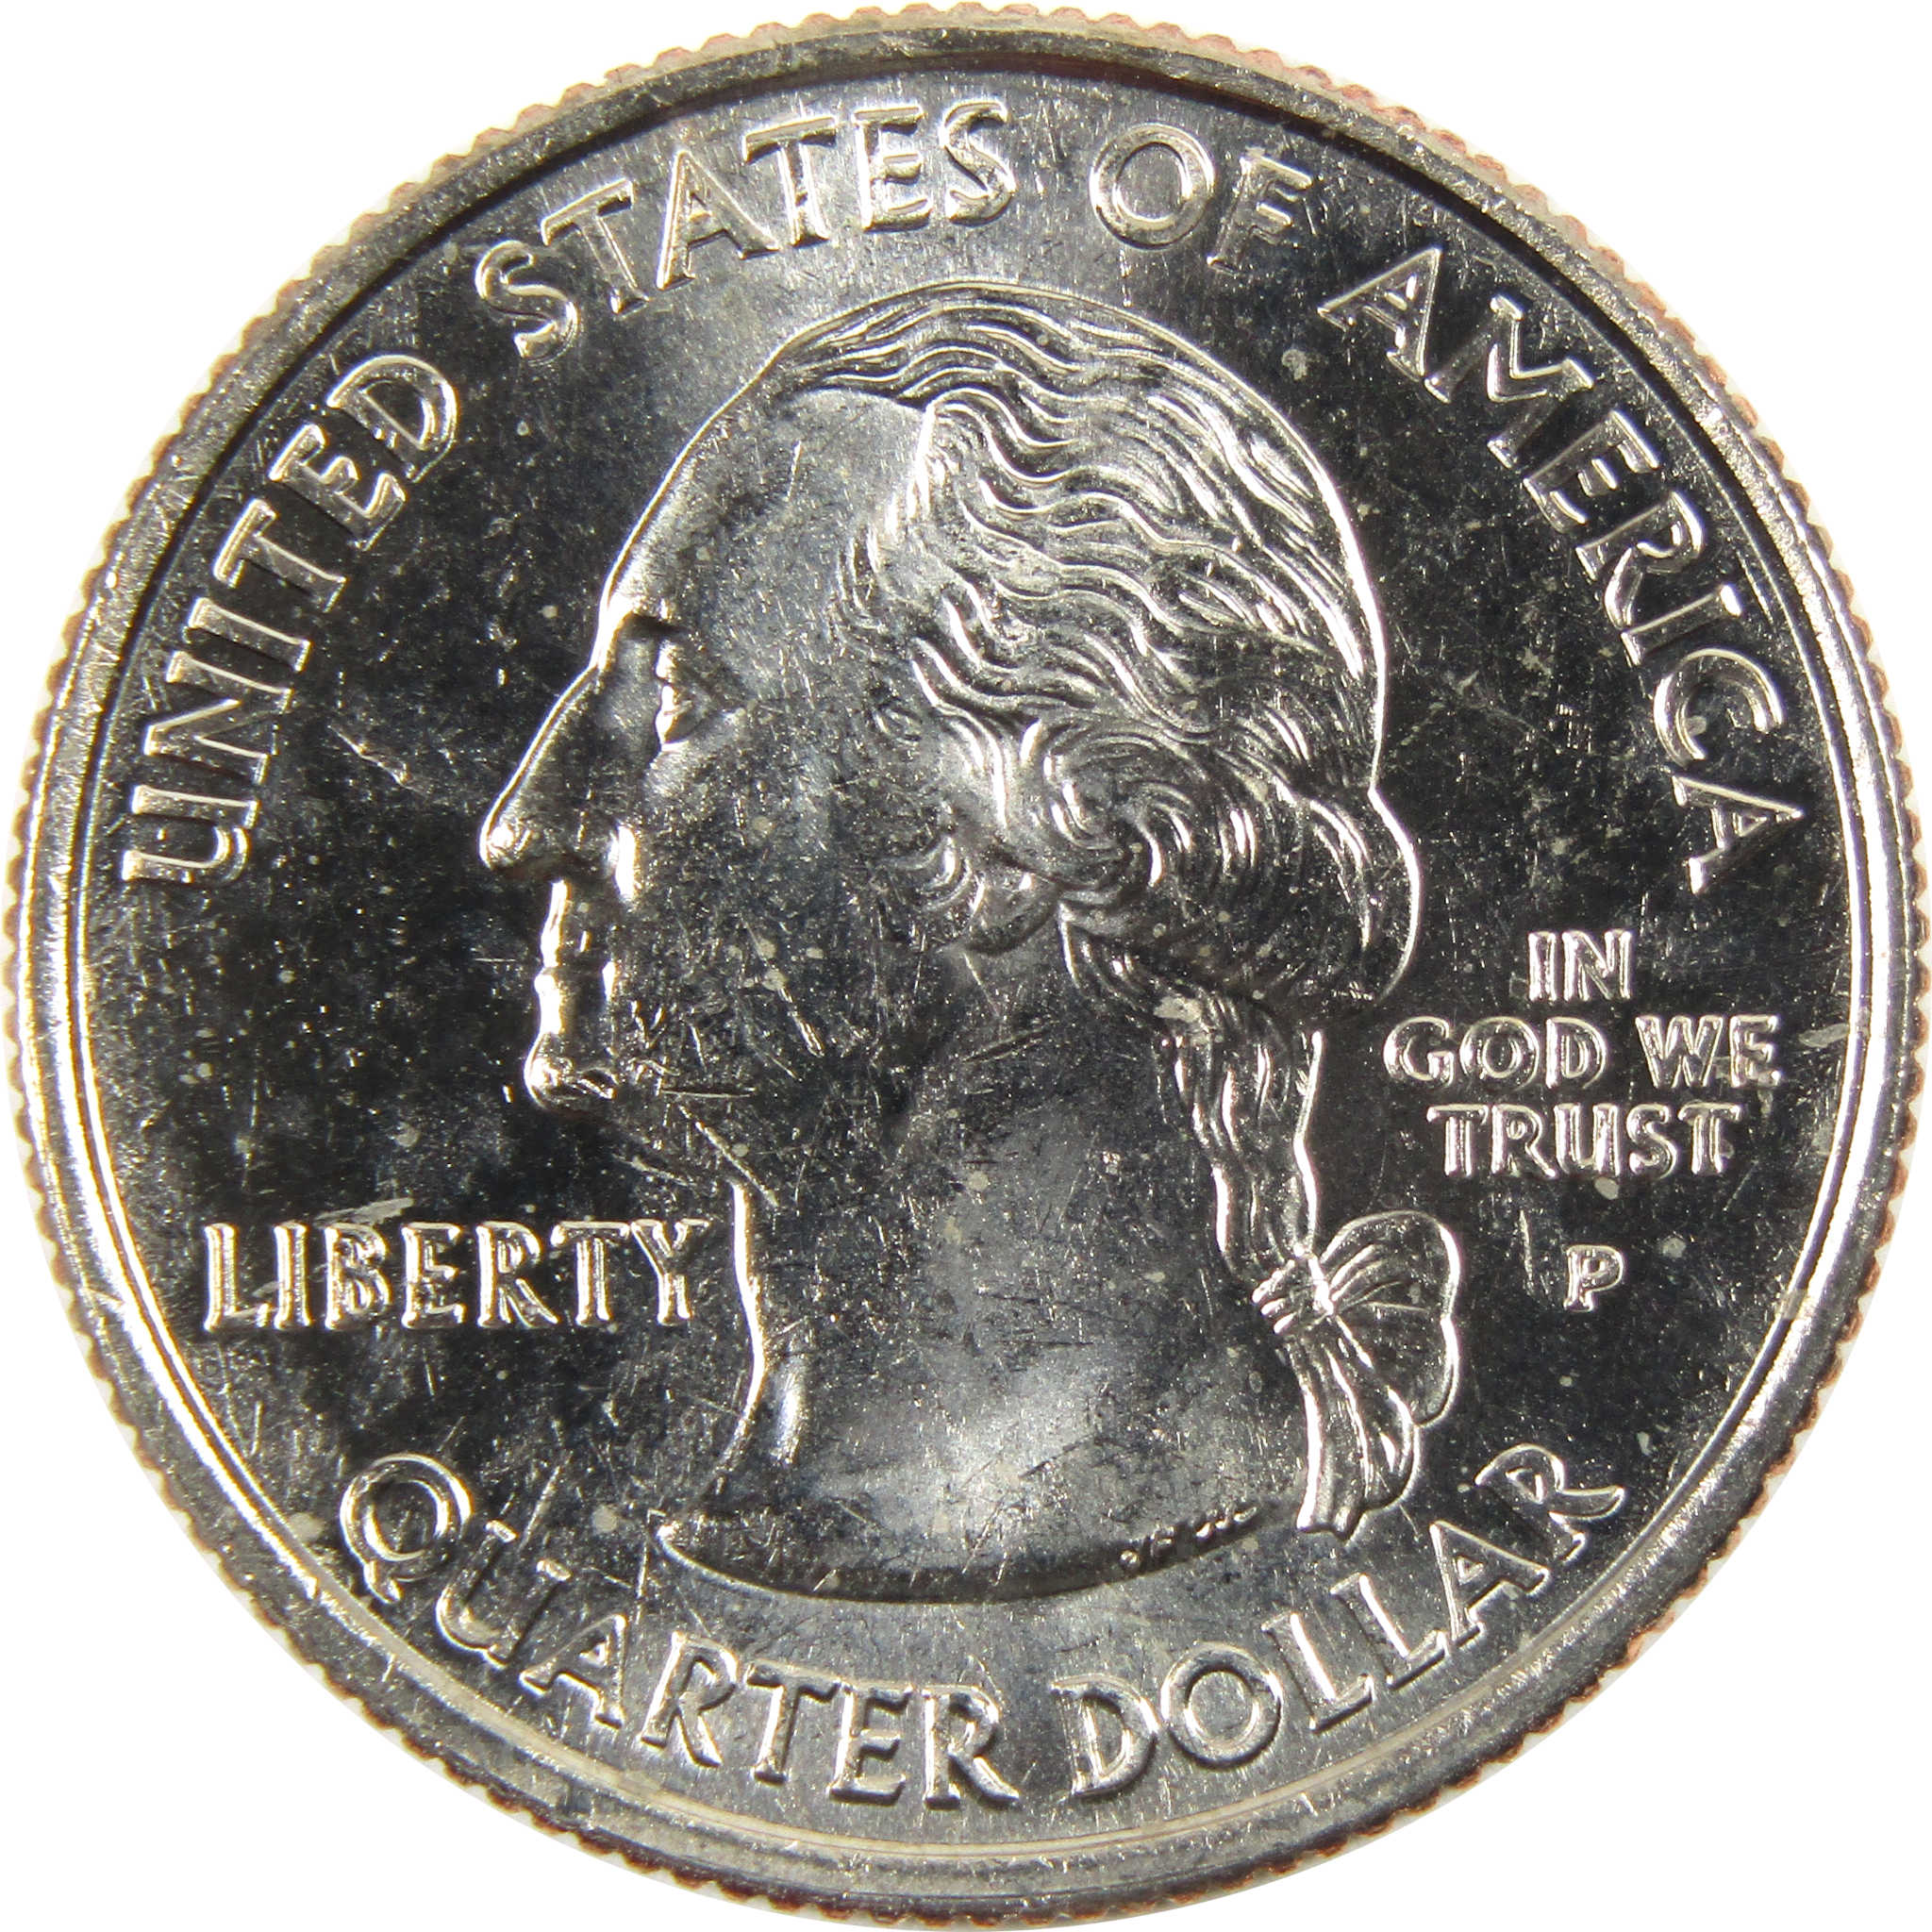 2008 P Hawaii State Quarter BU Uncirculated Clad 25c Coin